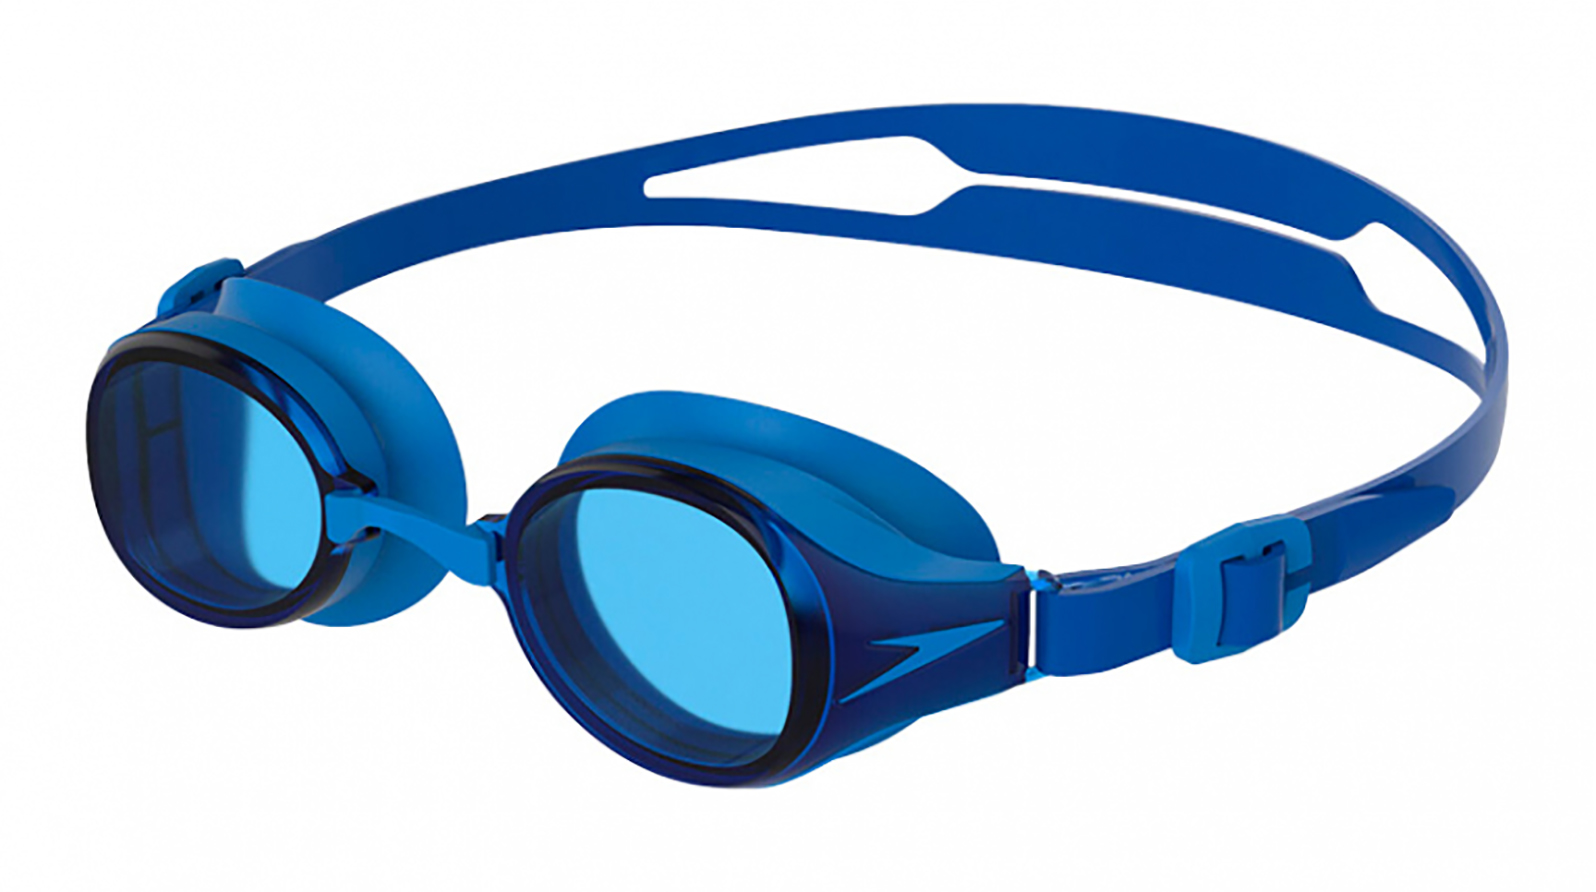 Speedo Очки для плавания Hydropure Optical F809 -4.5 очки для плавания speedo fastskin pure focus mirror